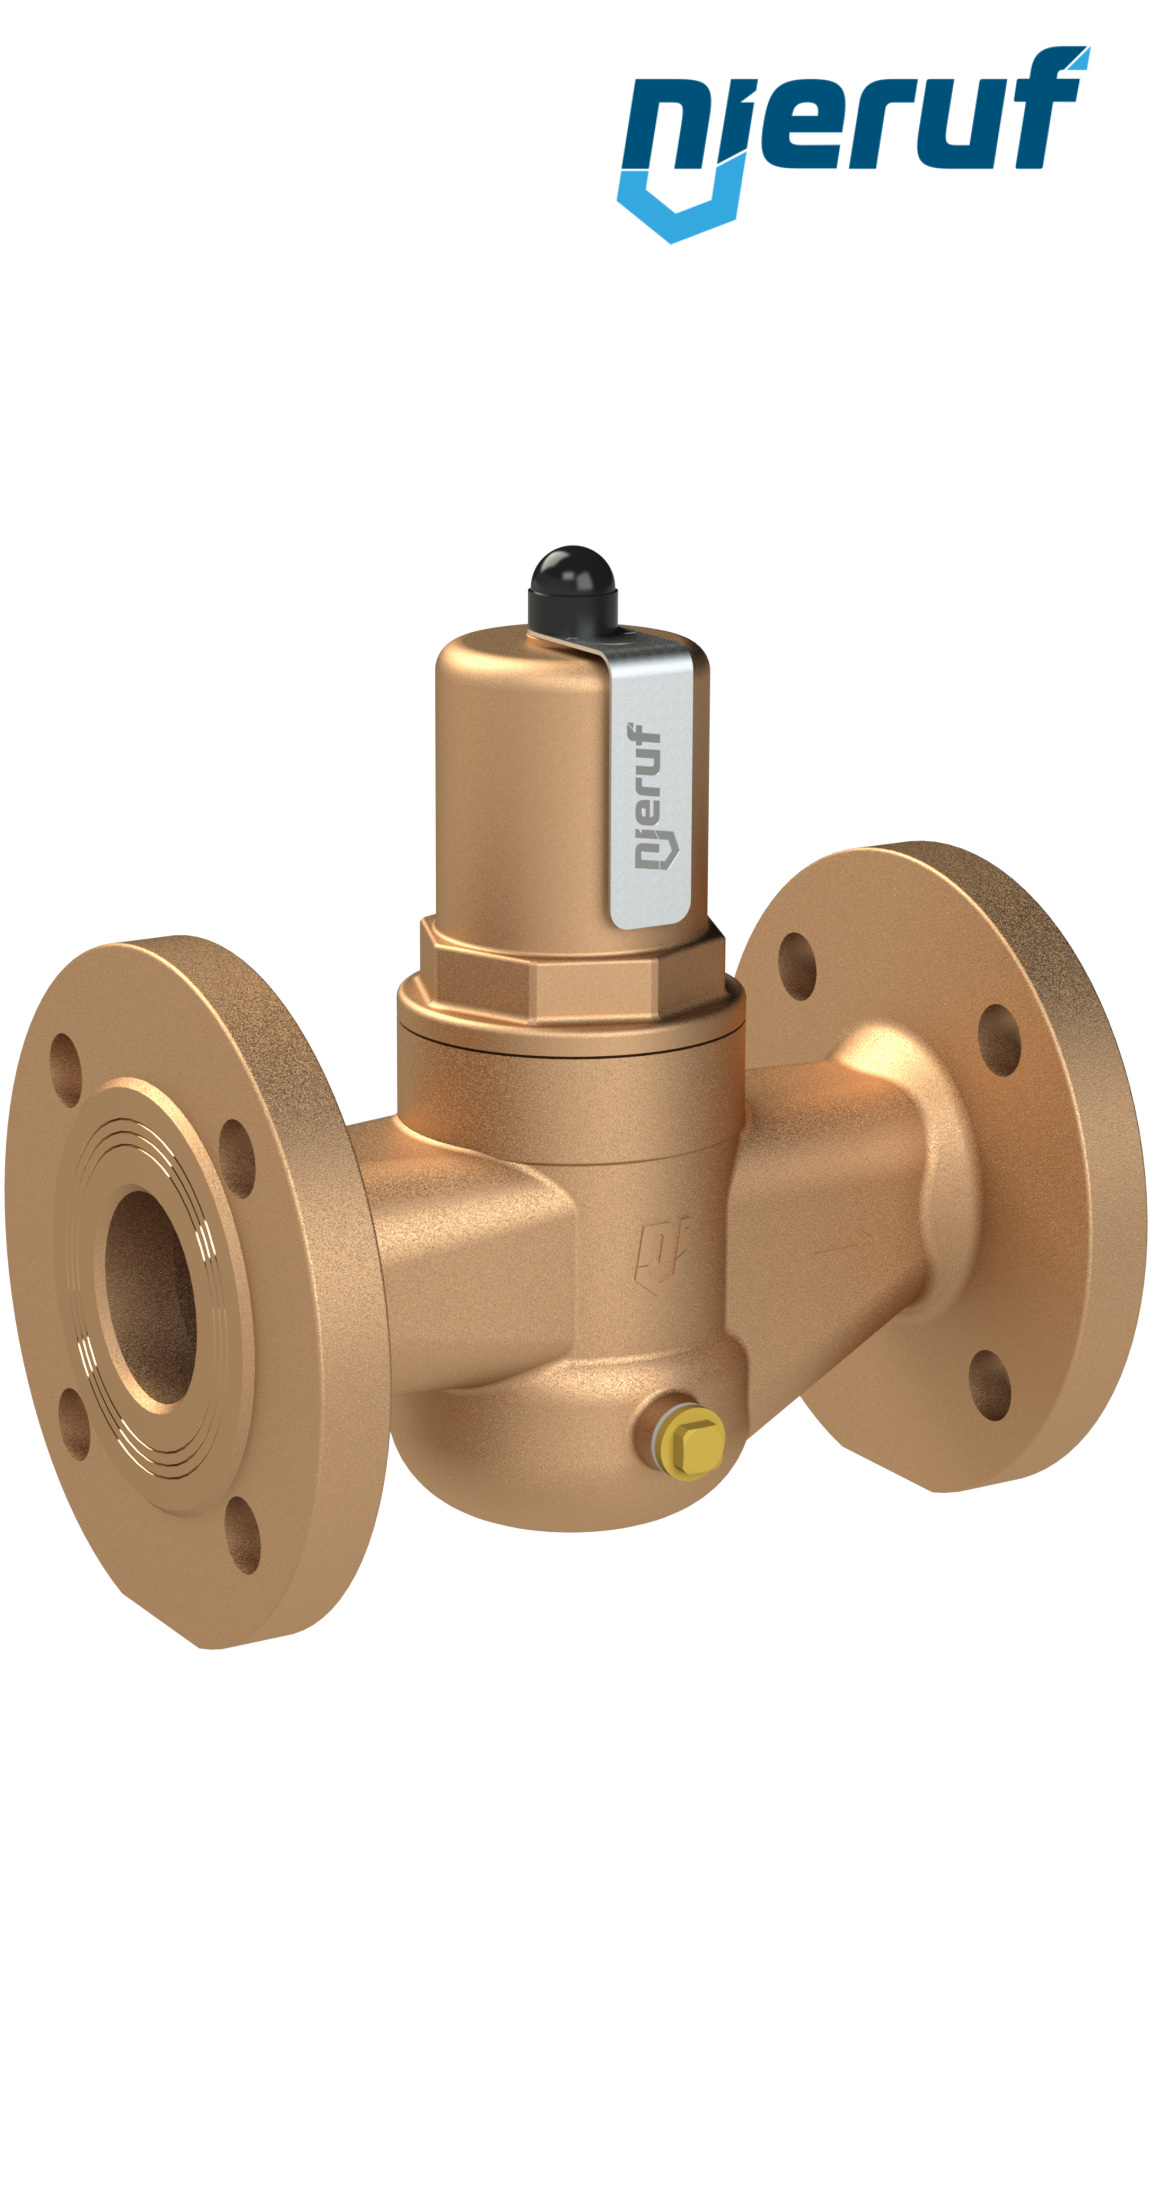 Flange-pressure reducing valve DN 50 PN16 DM05 gunmetal/brass EPDM 1.0 - 8.0 bar